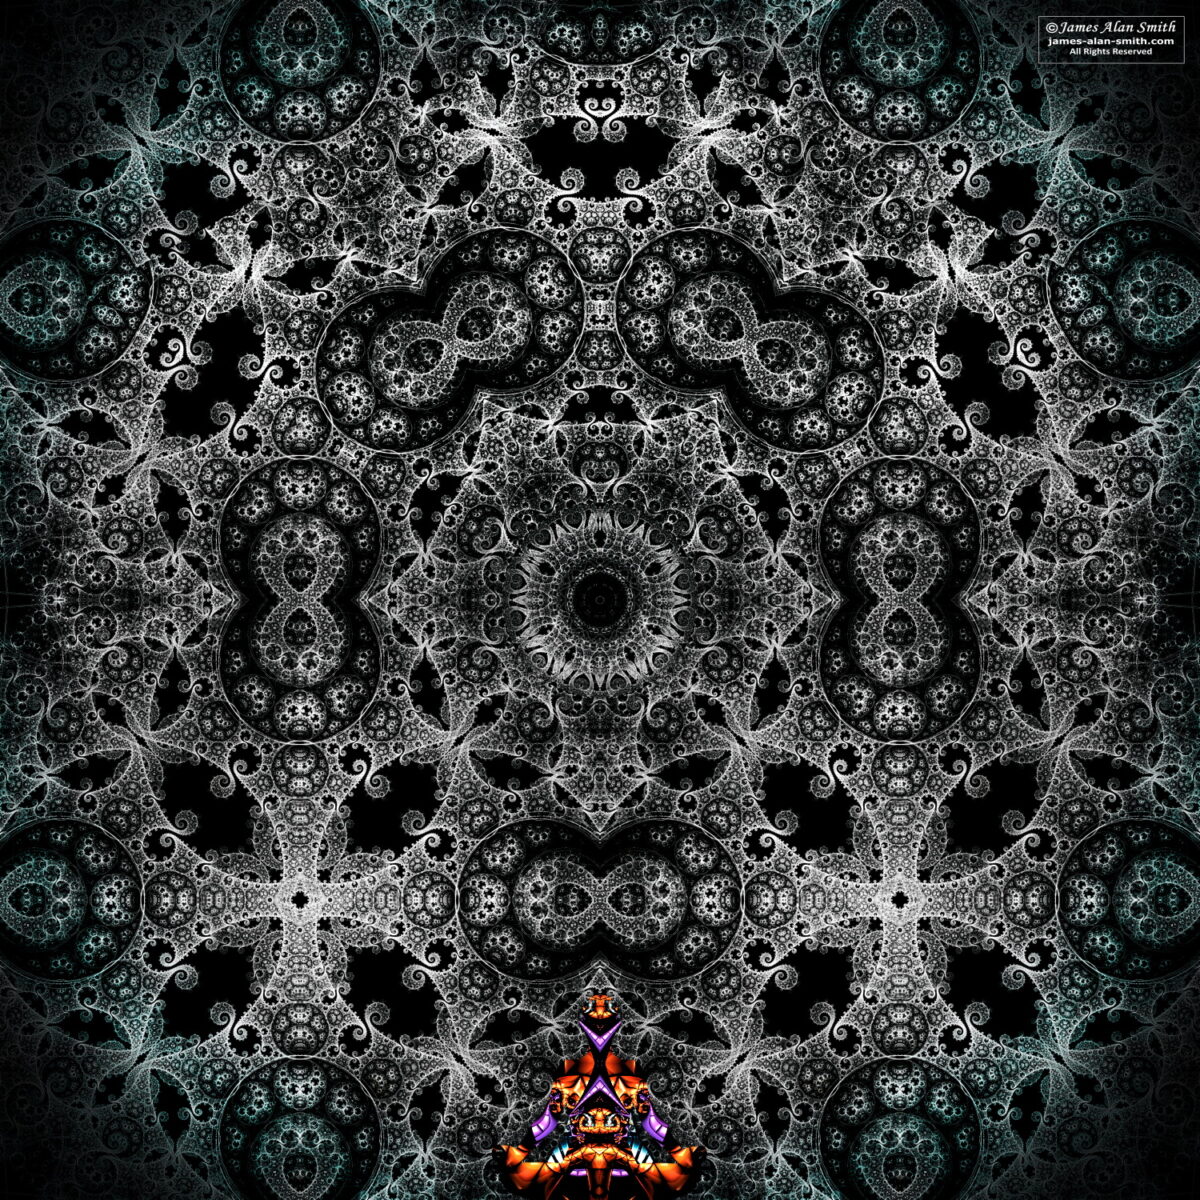 Cybernetic Dreams of Symmetry: Artwork by James Alan Smith